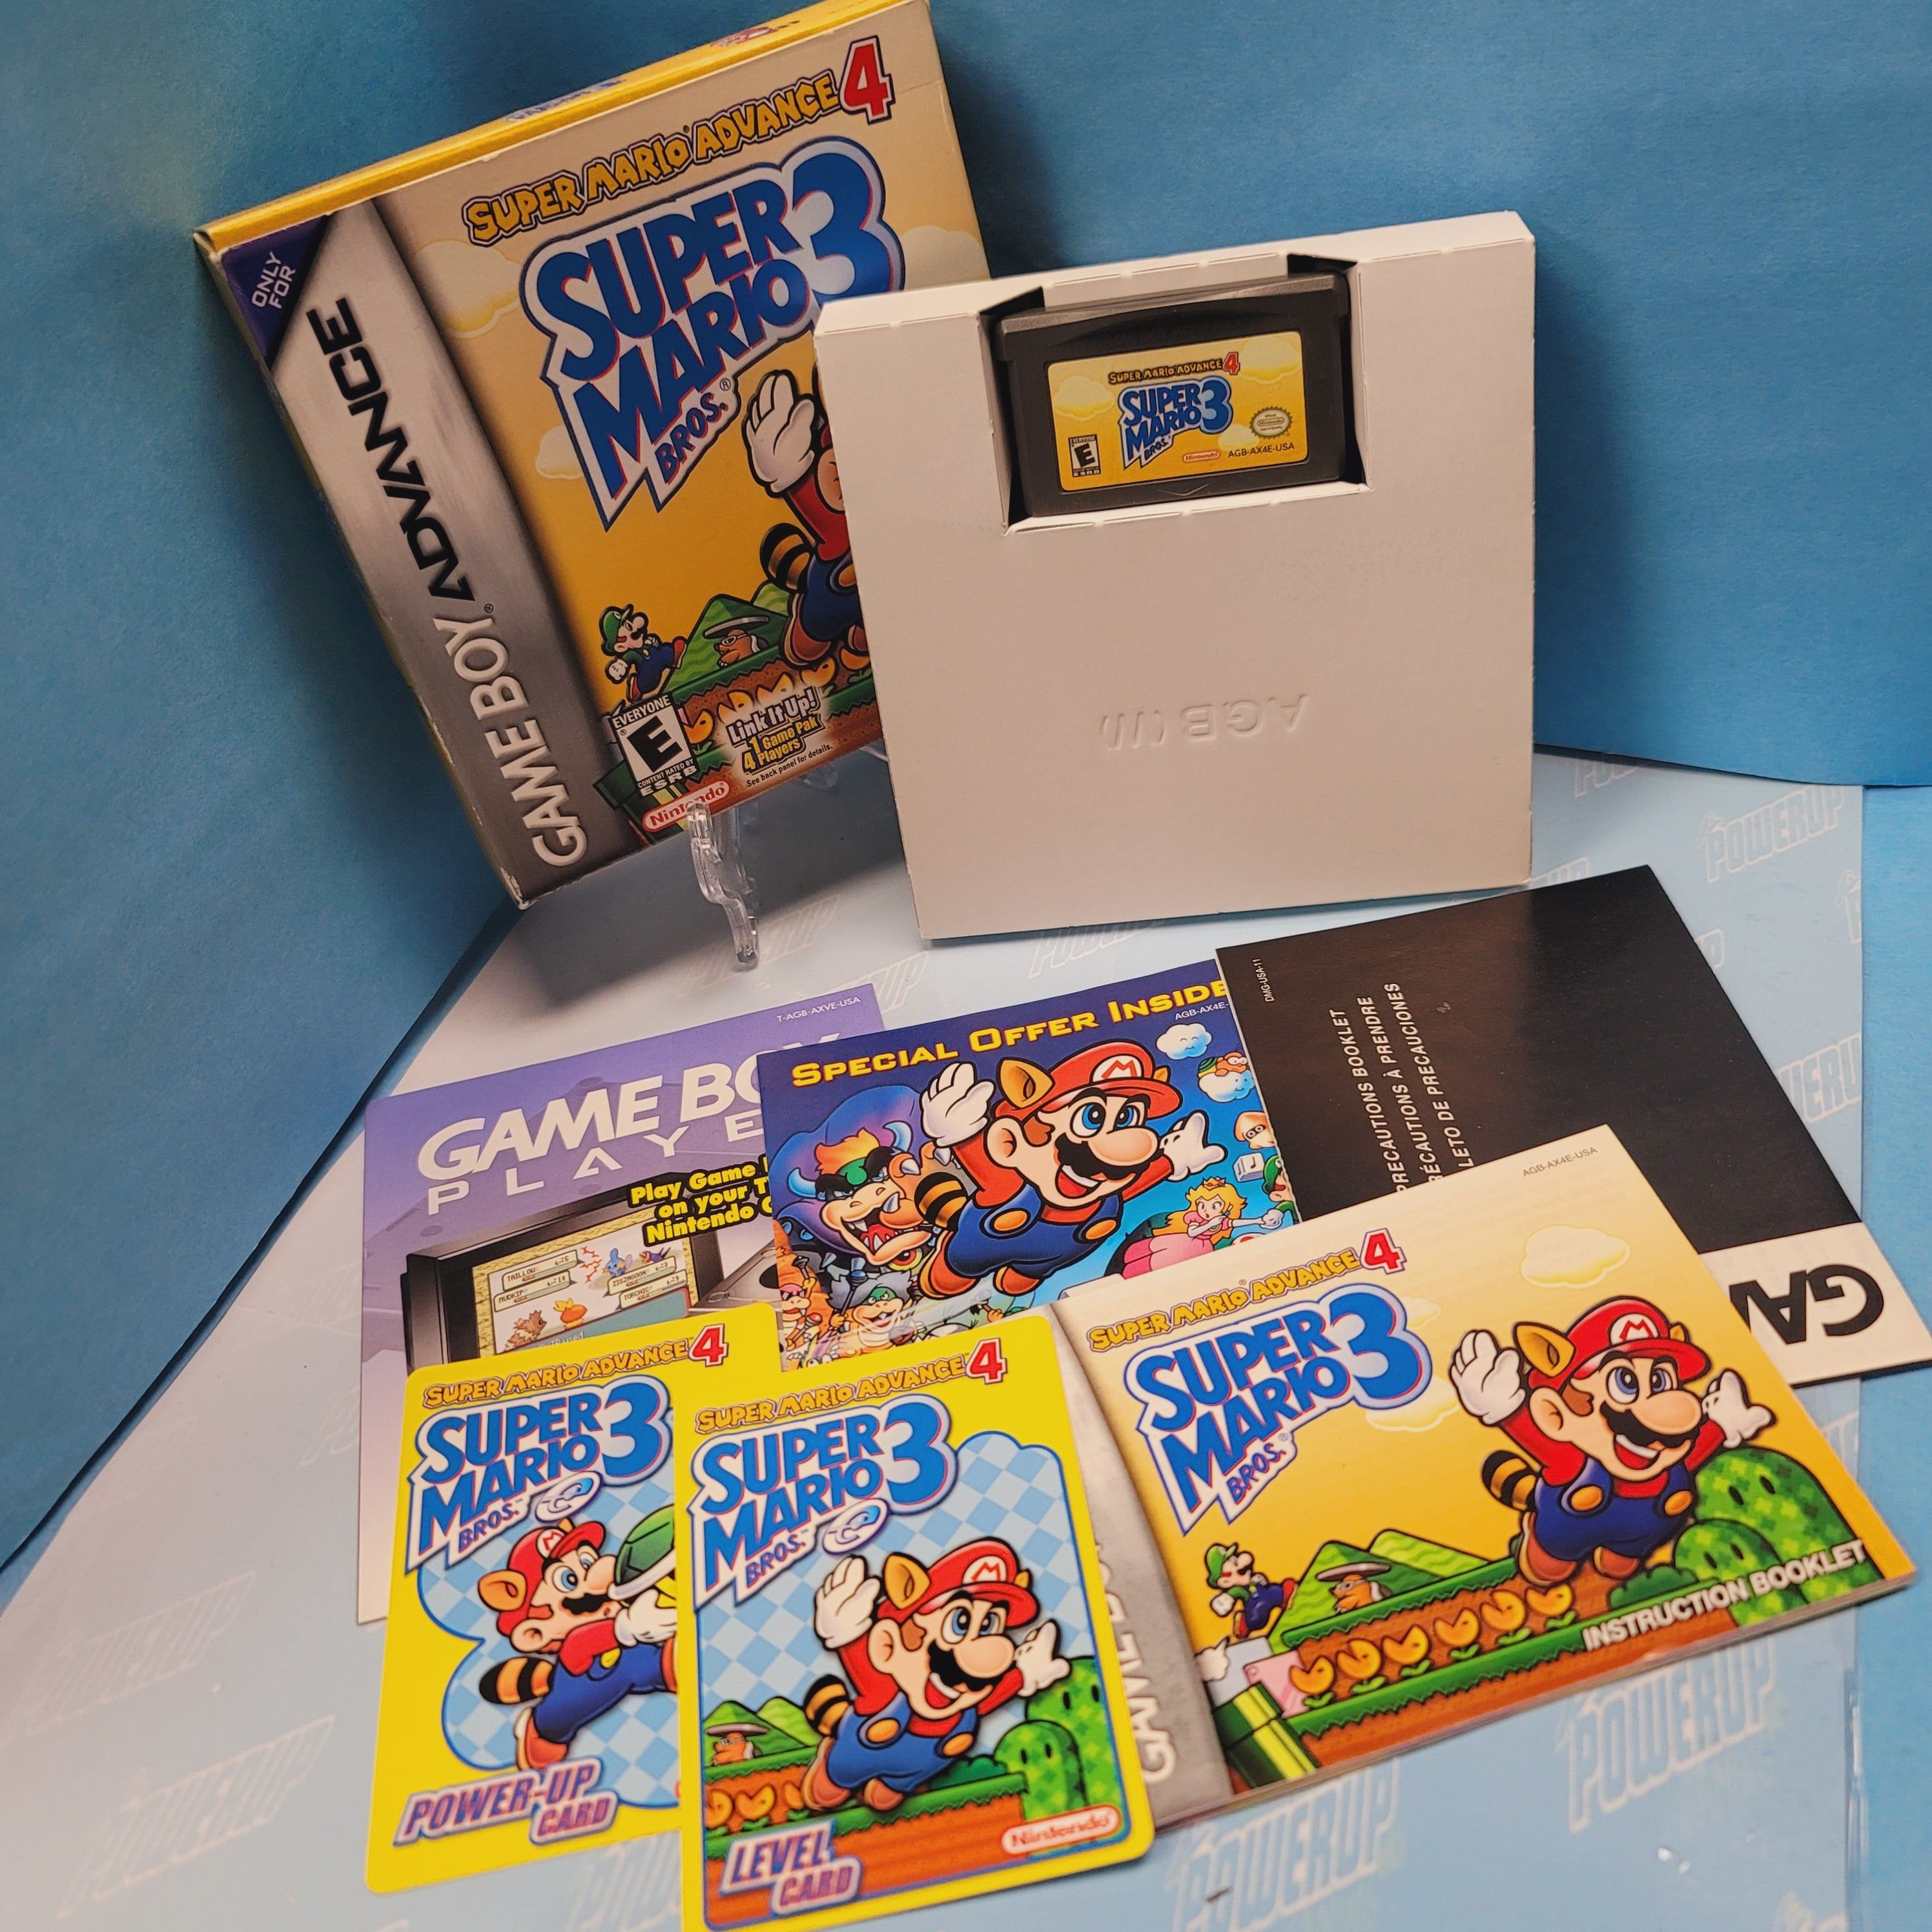 GBA - Super Mario Advance 4 Super Mario Bros 3 (Complete in Box / A / With Manual)